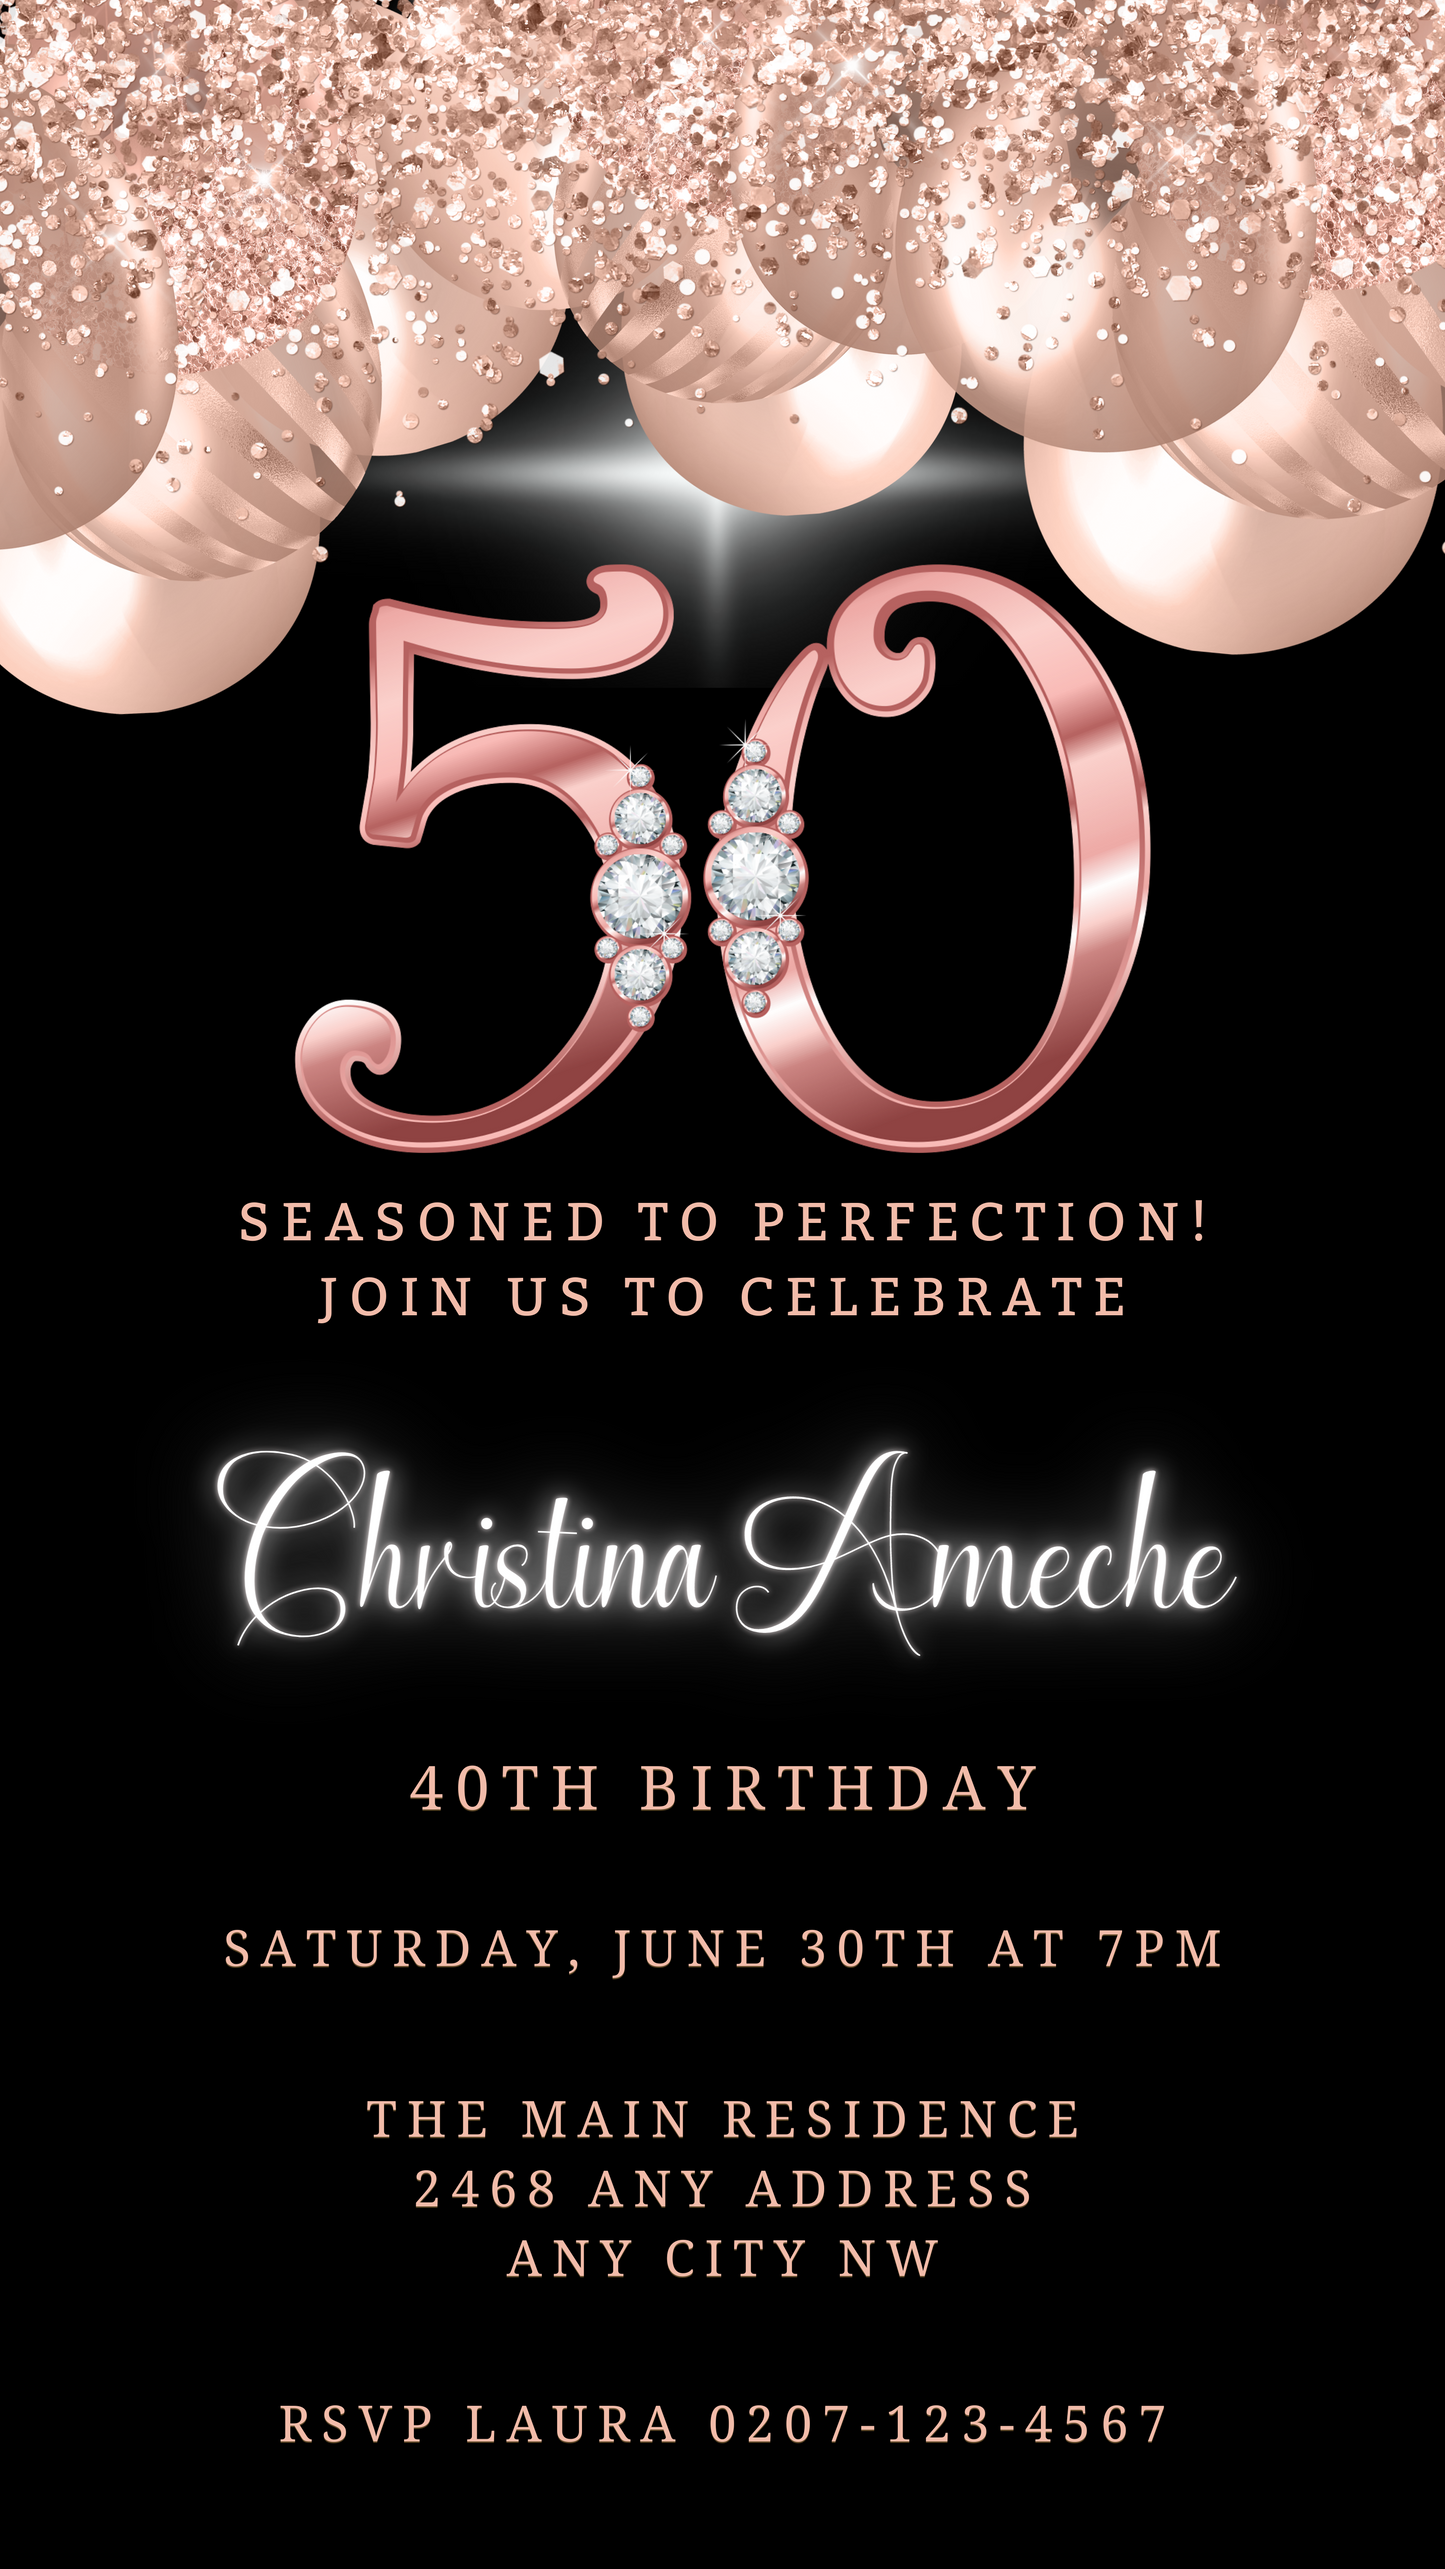 Rose Gold Balloons Diamond Studs 50th Birthday Evite, customizable digital invitation with black, gold, pearls, and diamonds, editable via Canva for smartphone sharing.